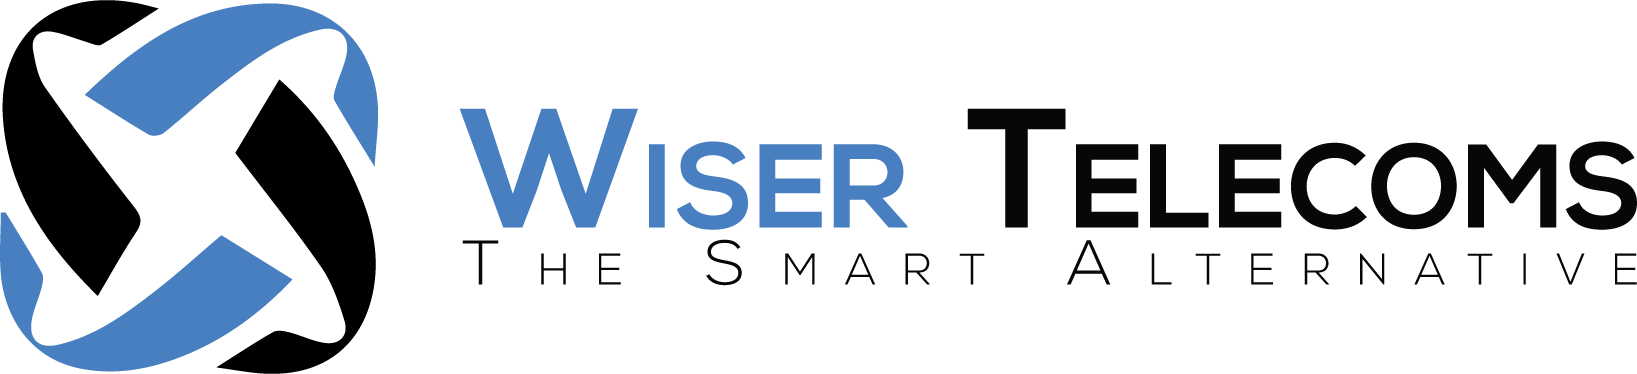 Wiser Telecoms logo